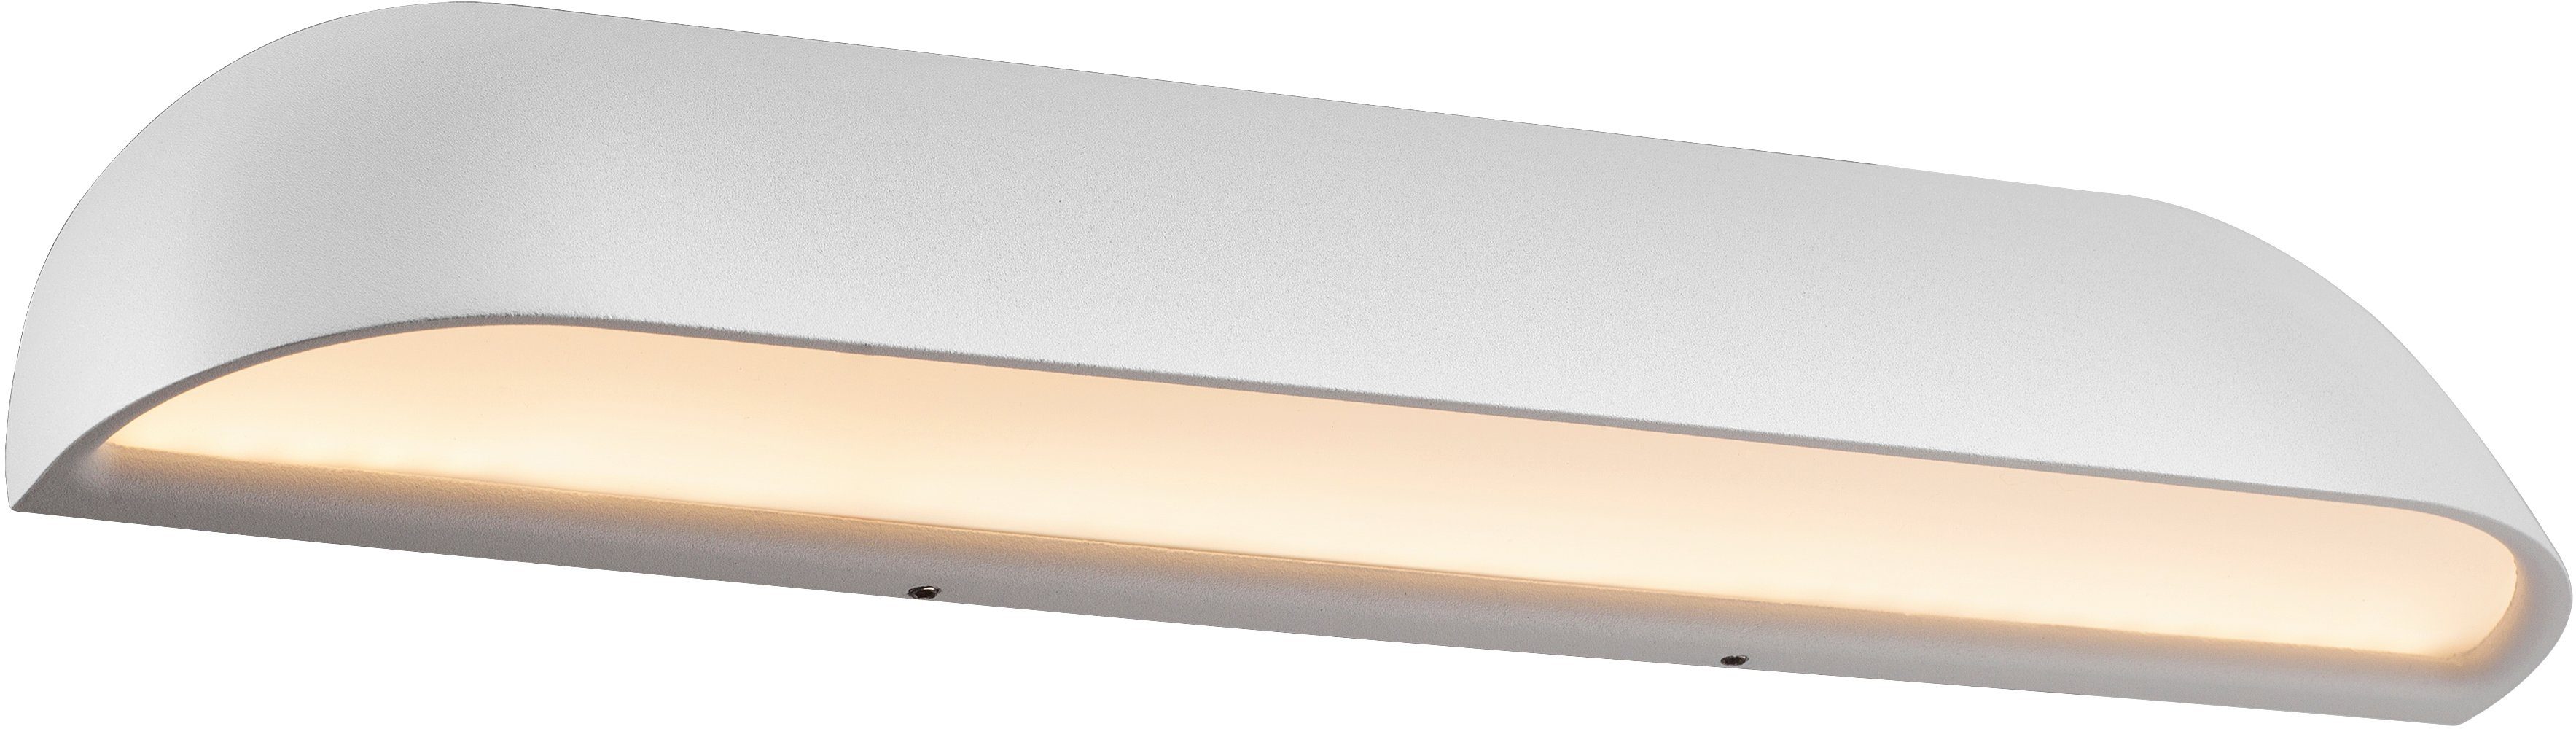 Nordlux LED Wandleuchte FRONT, LED fest integriert, Warmweiß, inkl. LED Modul, 5 Jahre Garantie | Wandleuchten